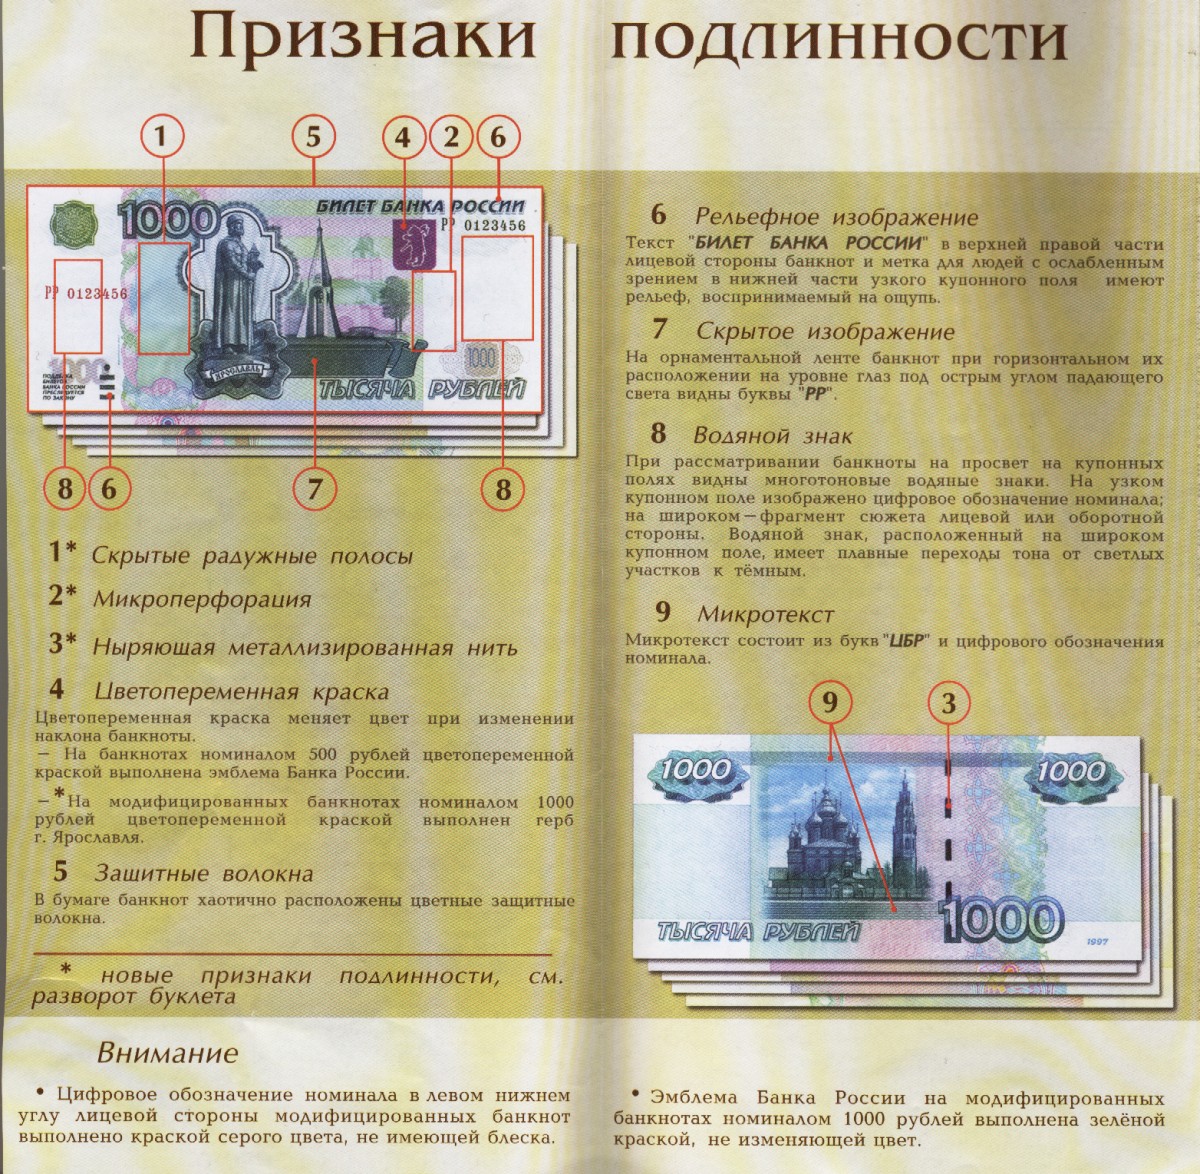 Признаки подлинности банкнот